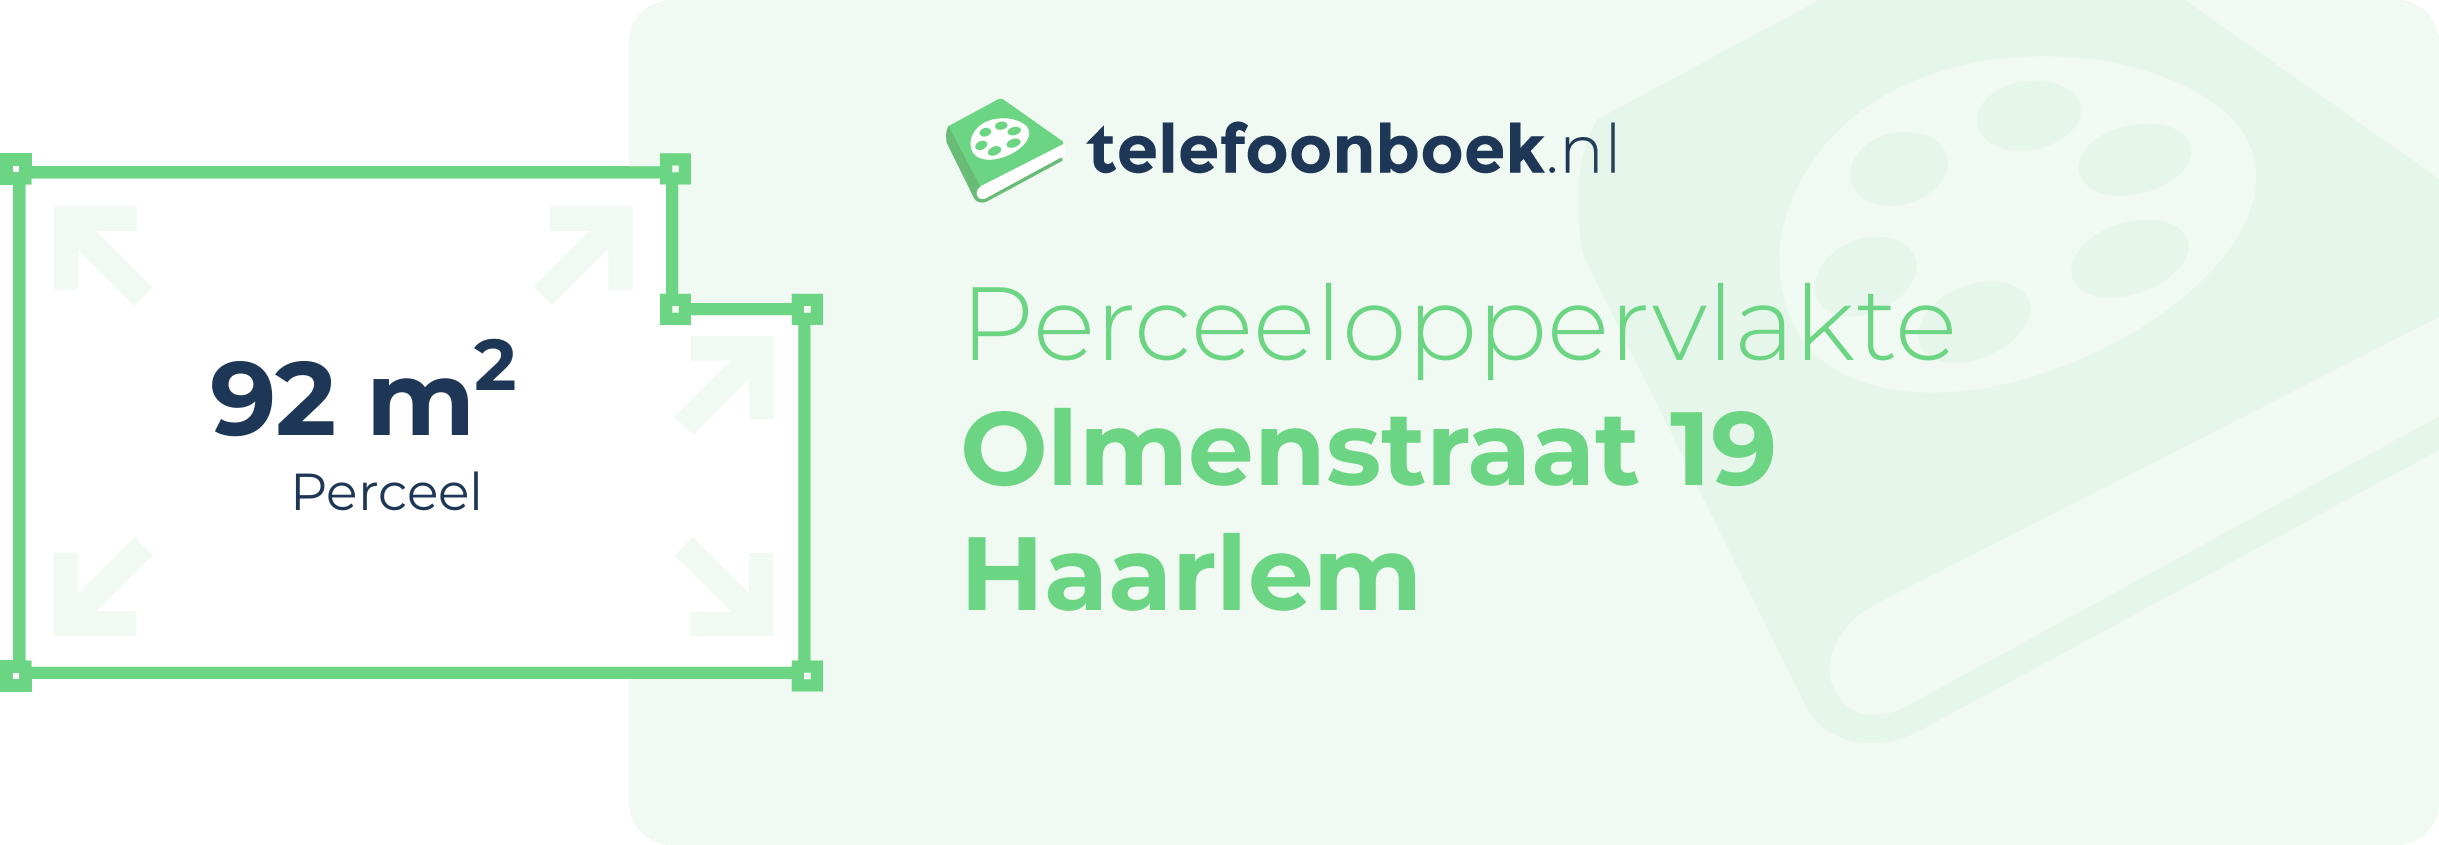 Perceeloppervlakte Olmenstraat 19 Haarlem